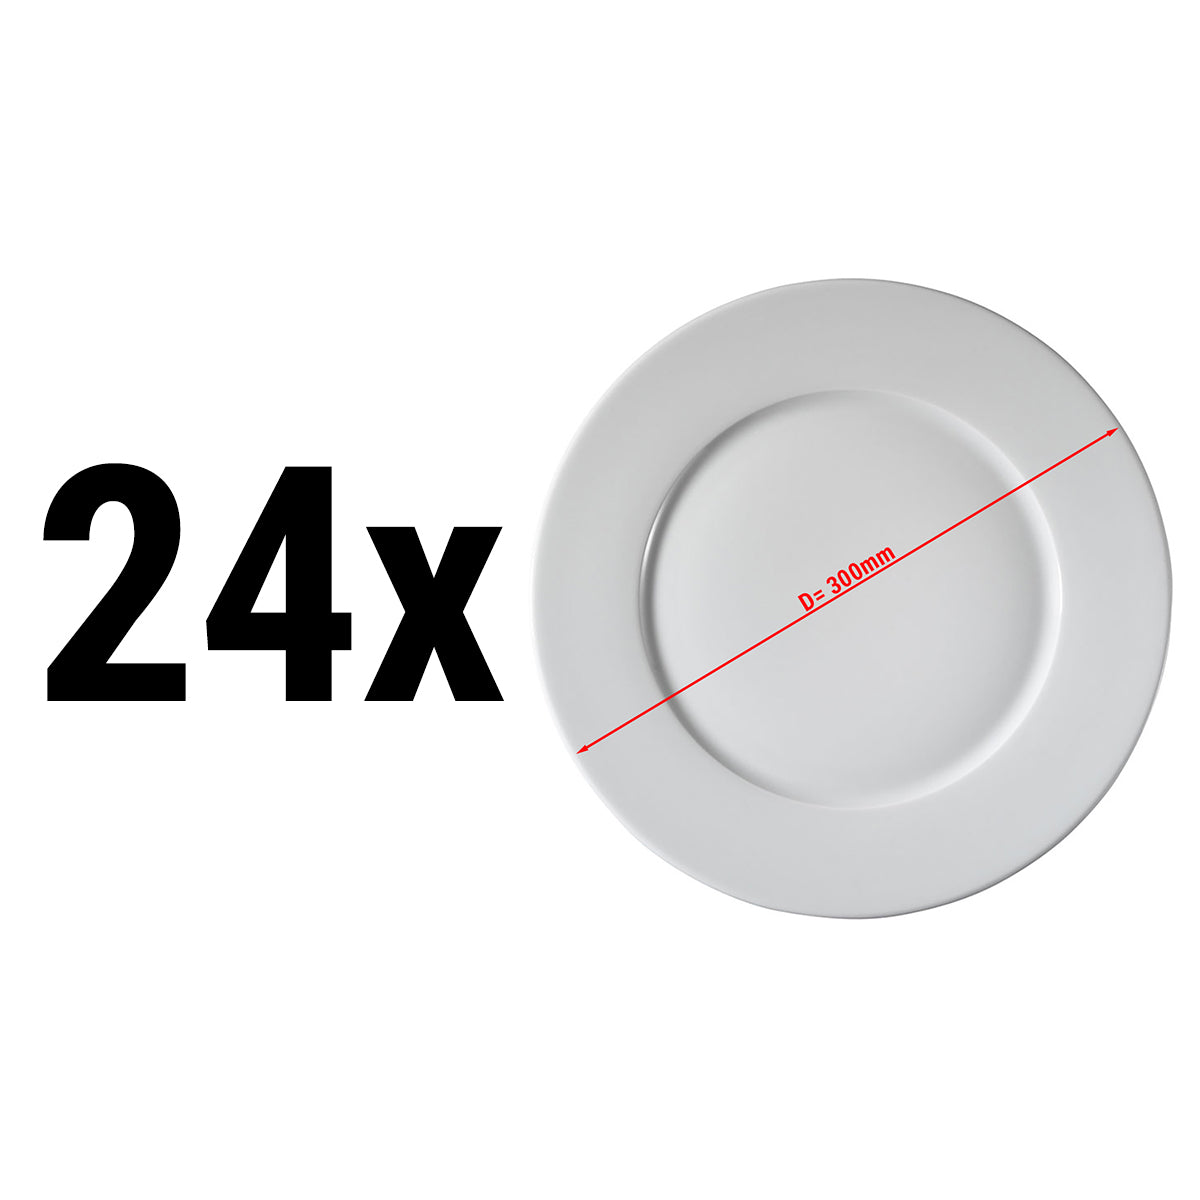 (24 stk) PERA Hvid - flad tallerken - pizza tallerken - Ø 30 cm